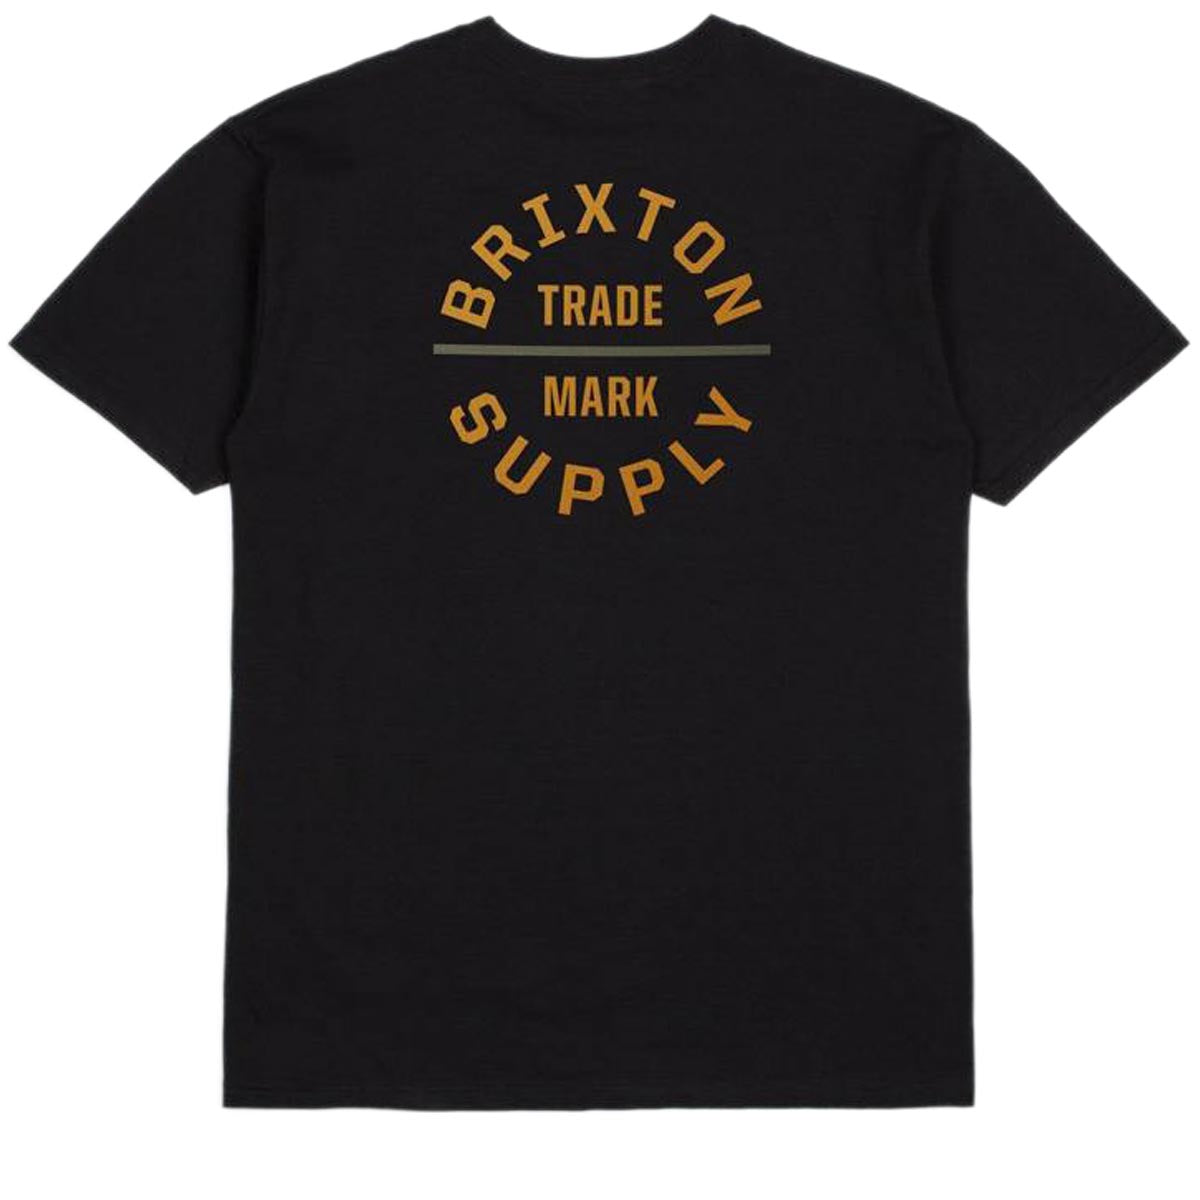 Brixton Oath V T-Shirt - Black/Bright Gold/Olive Surplus image 1